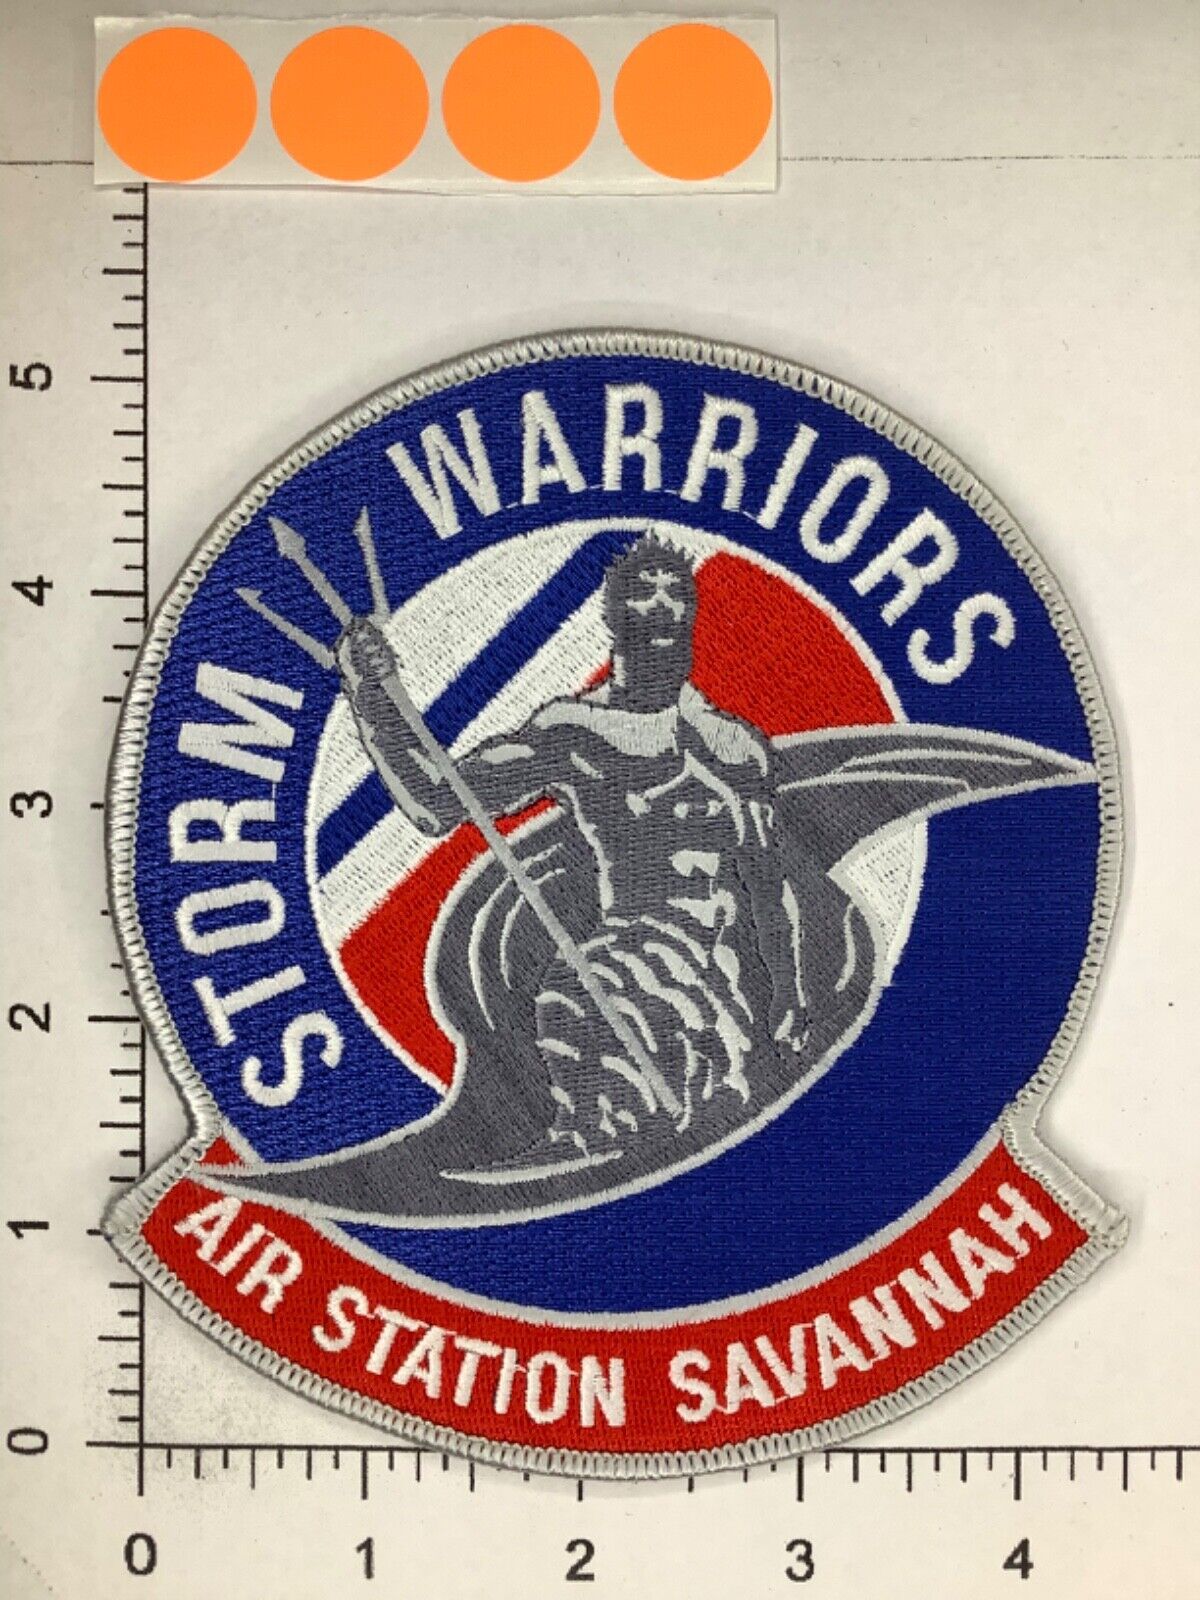 U.S.C.G. AIR STATION SAVANNAH STORM WARRIORS JACKET PATCH